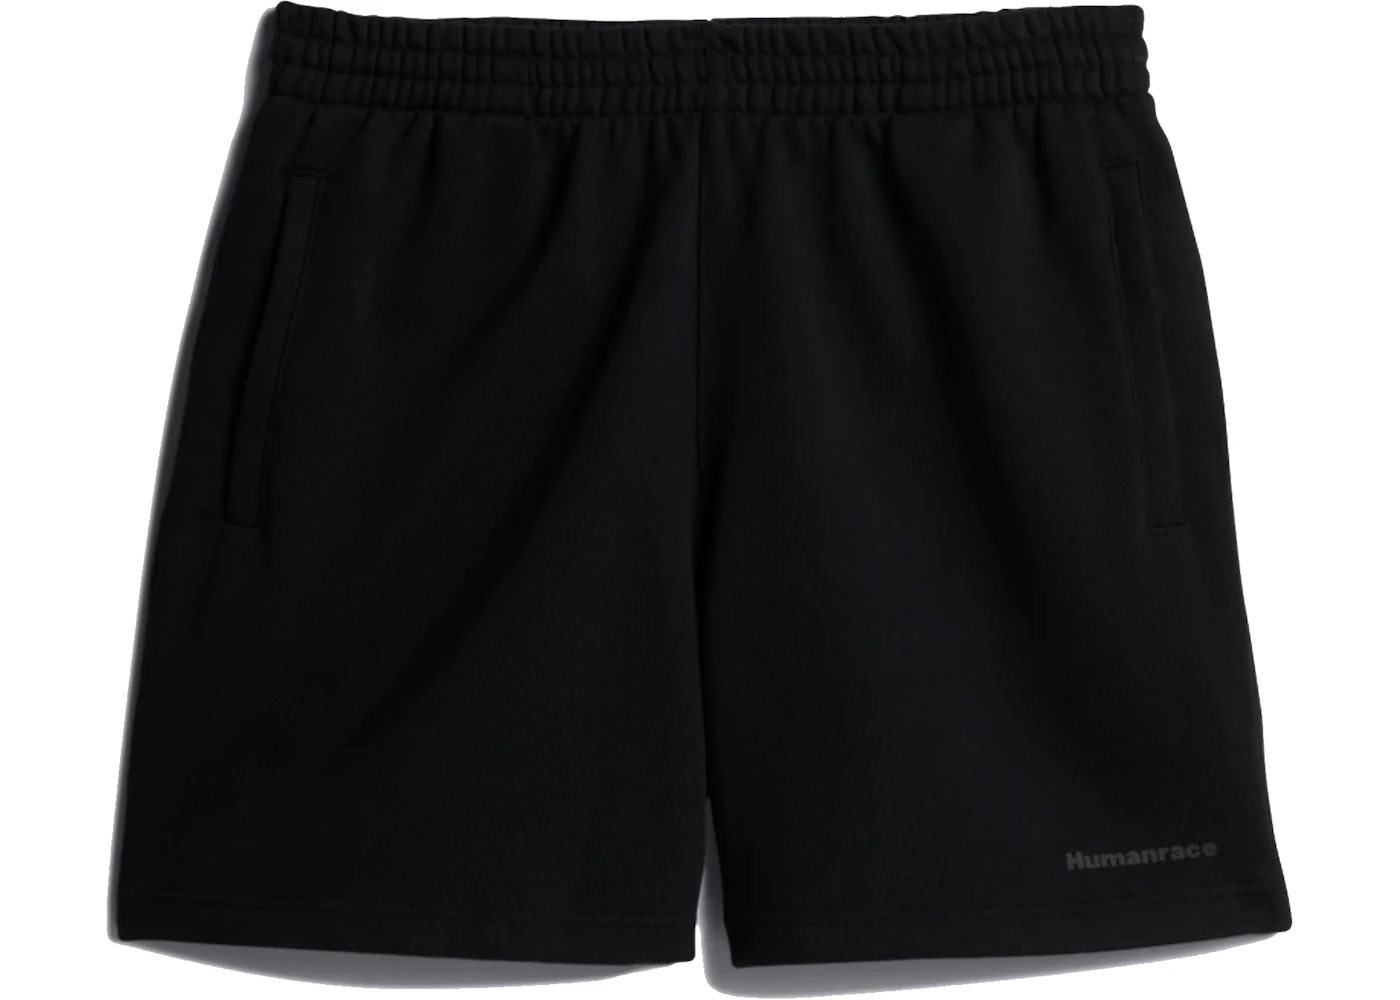 adidas x Pharrell Williams Basics Shorts Black - FW20 - US